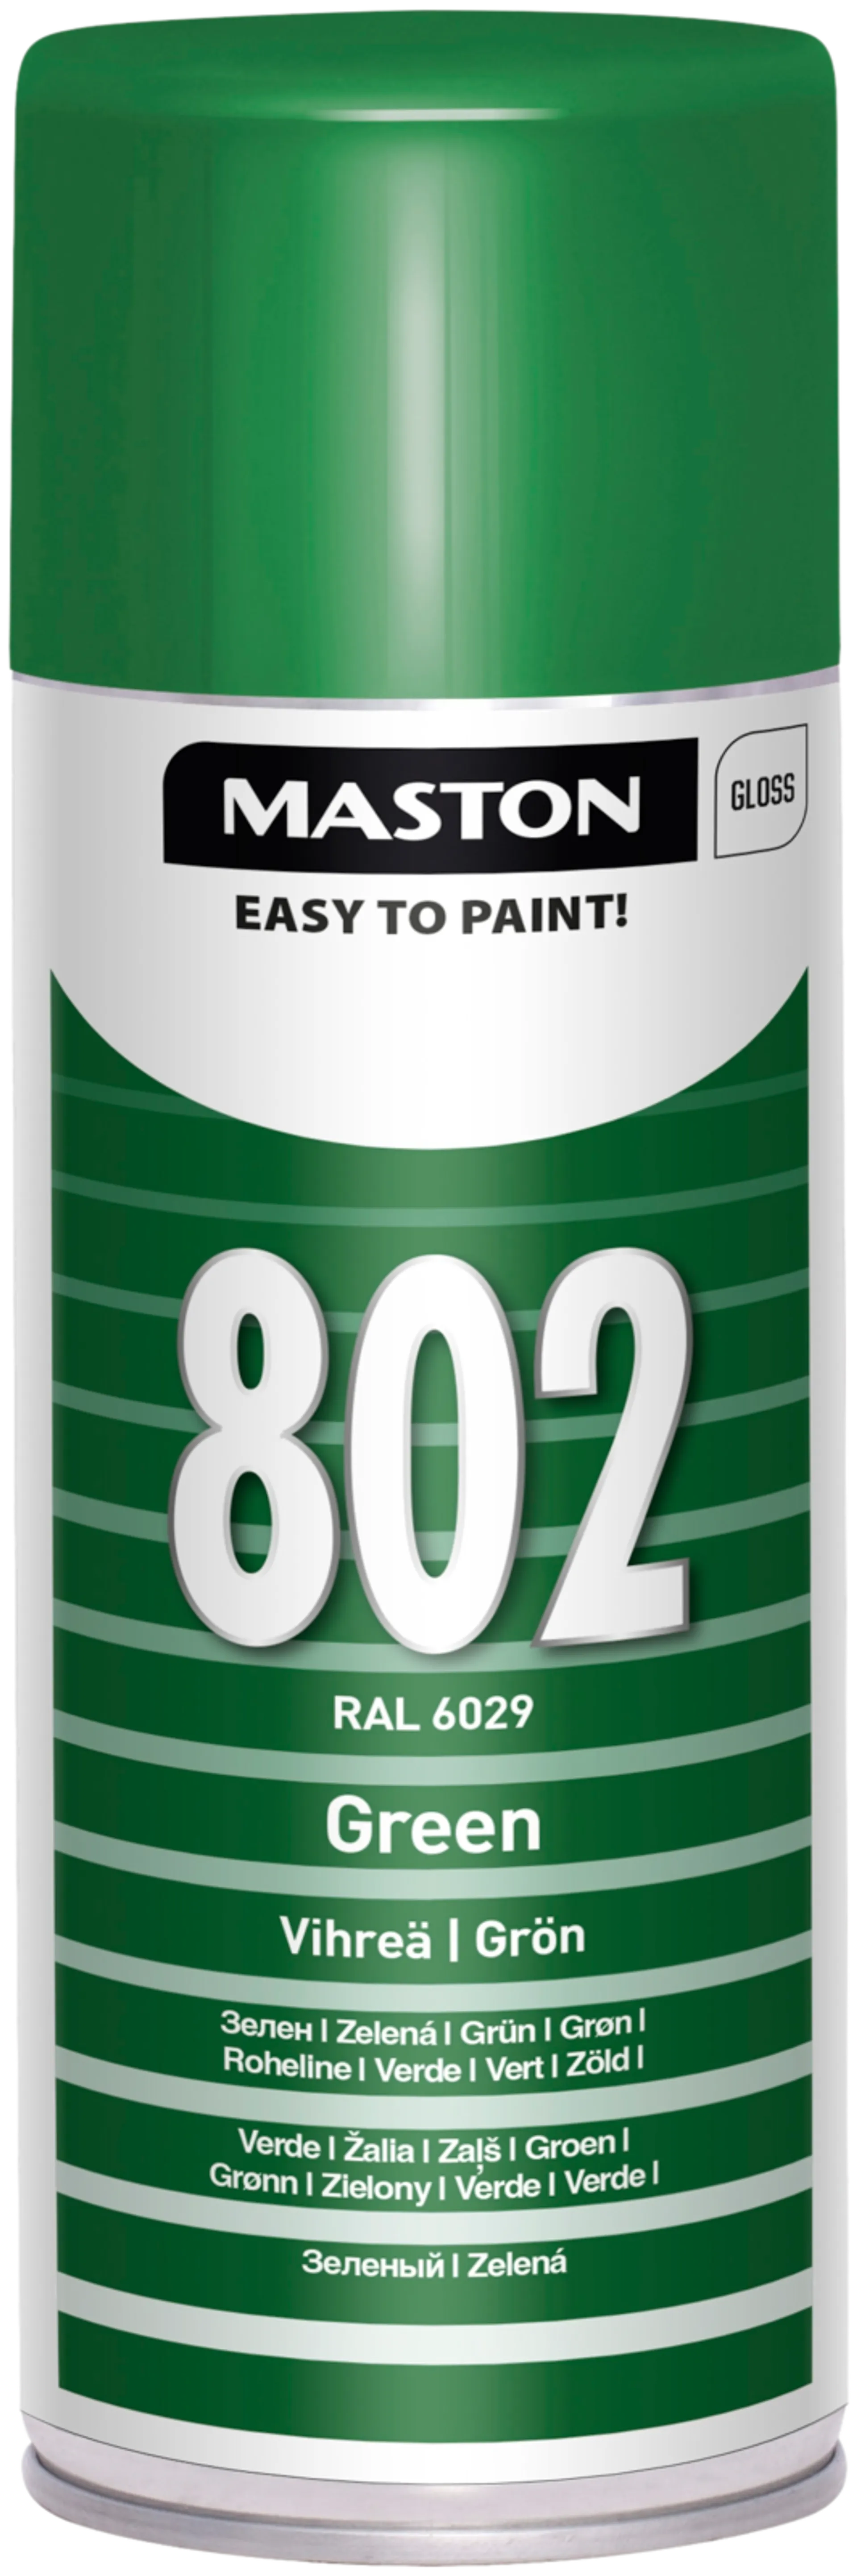 Maston spraymaali vihreä 802 400ml RAL 6029